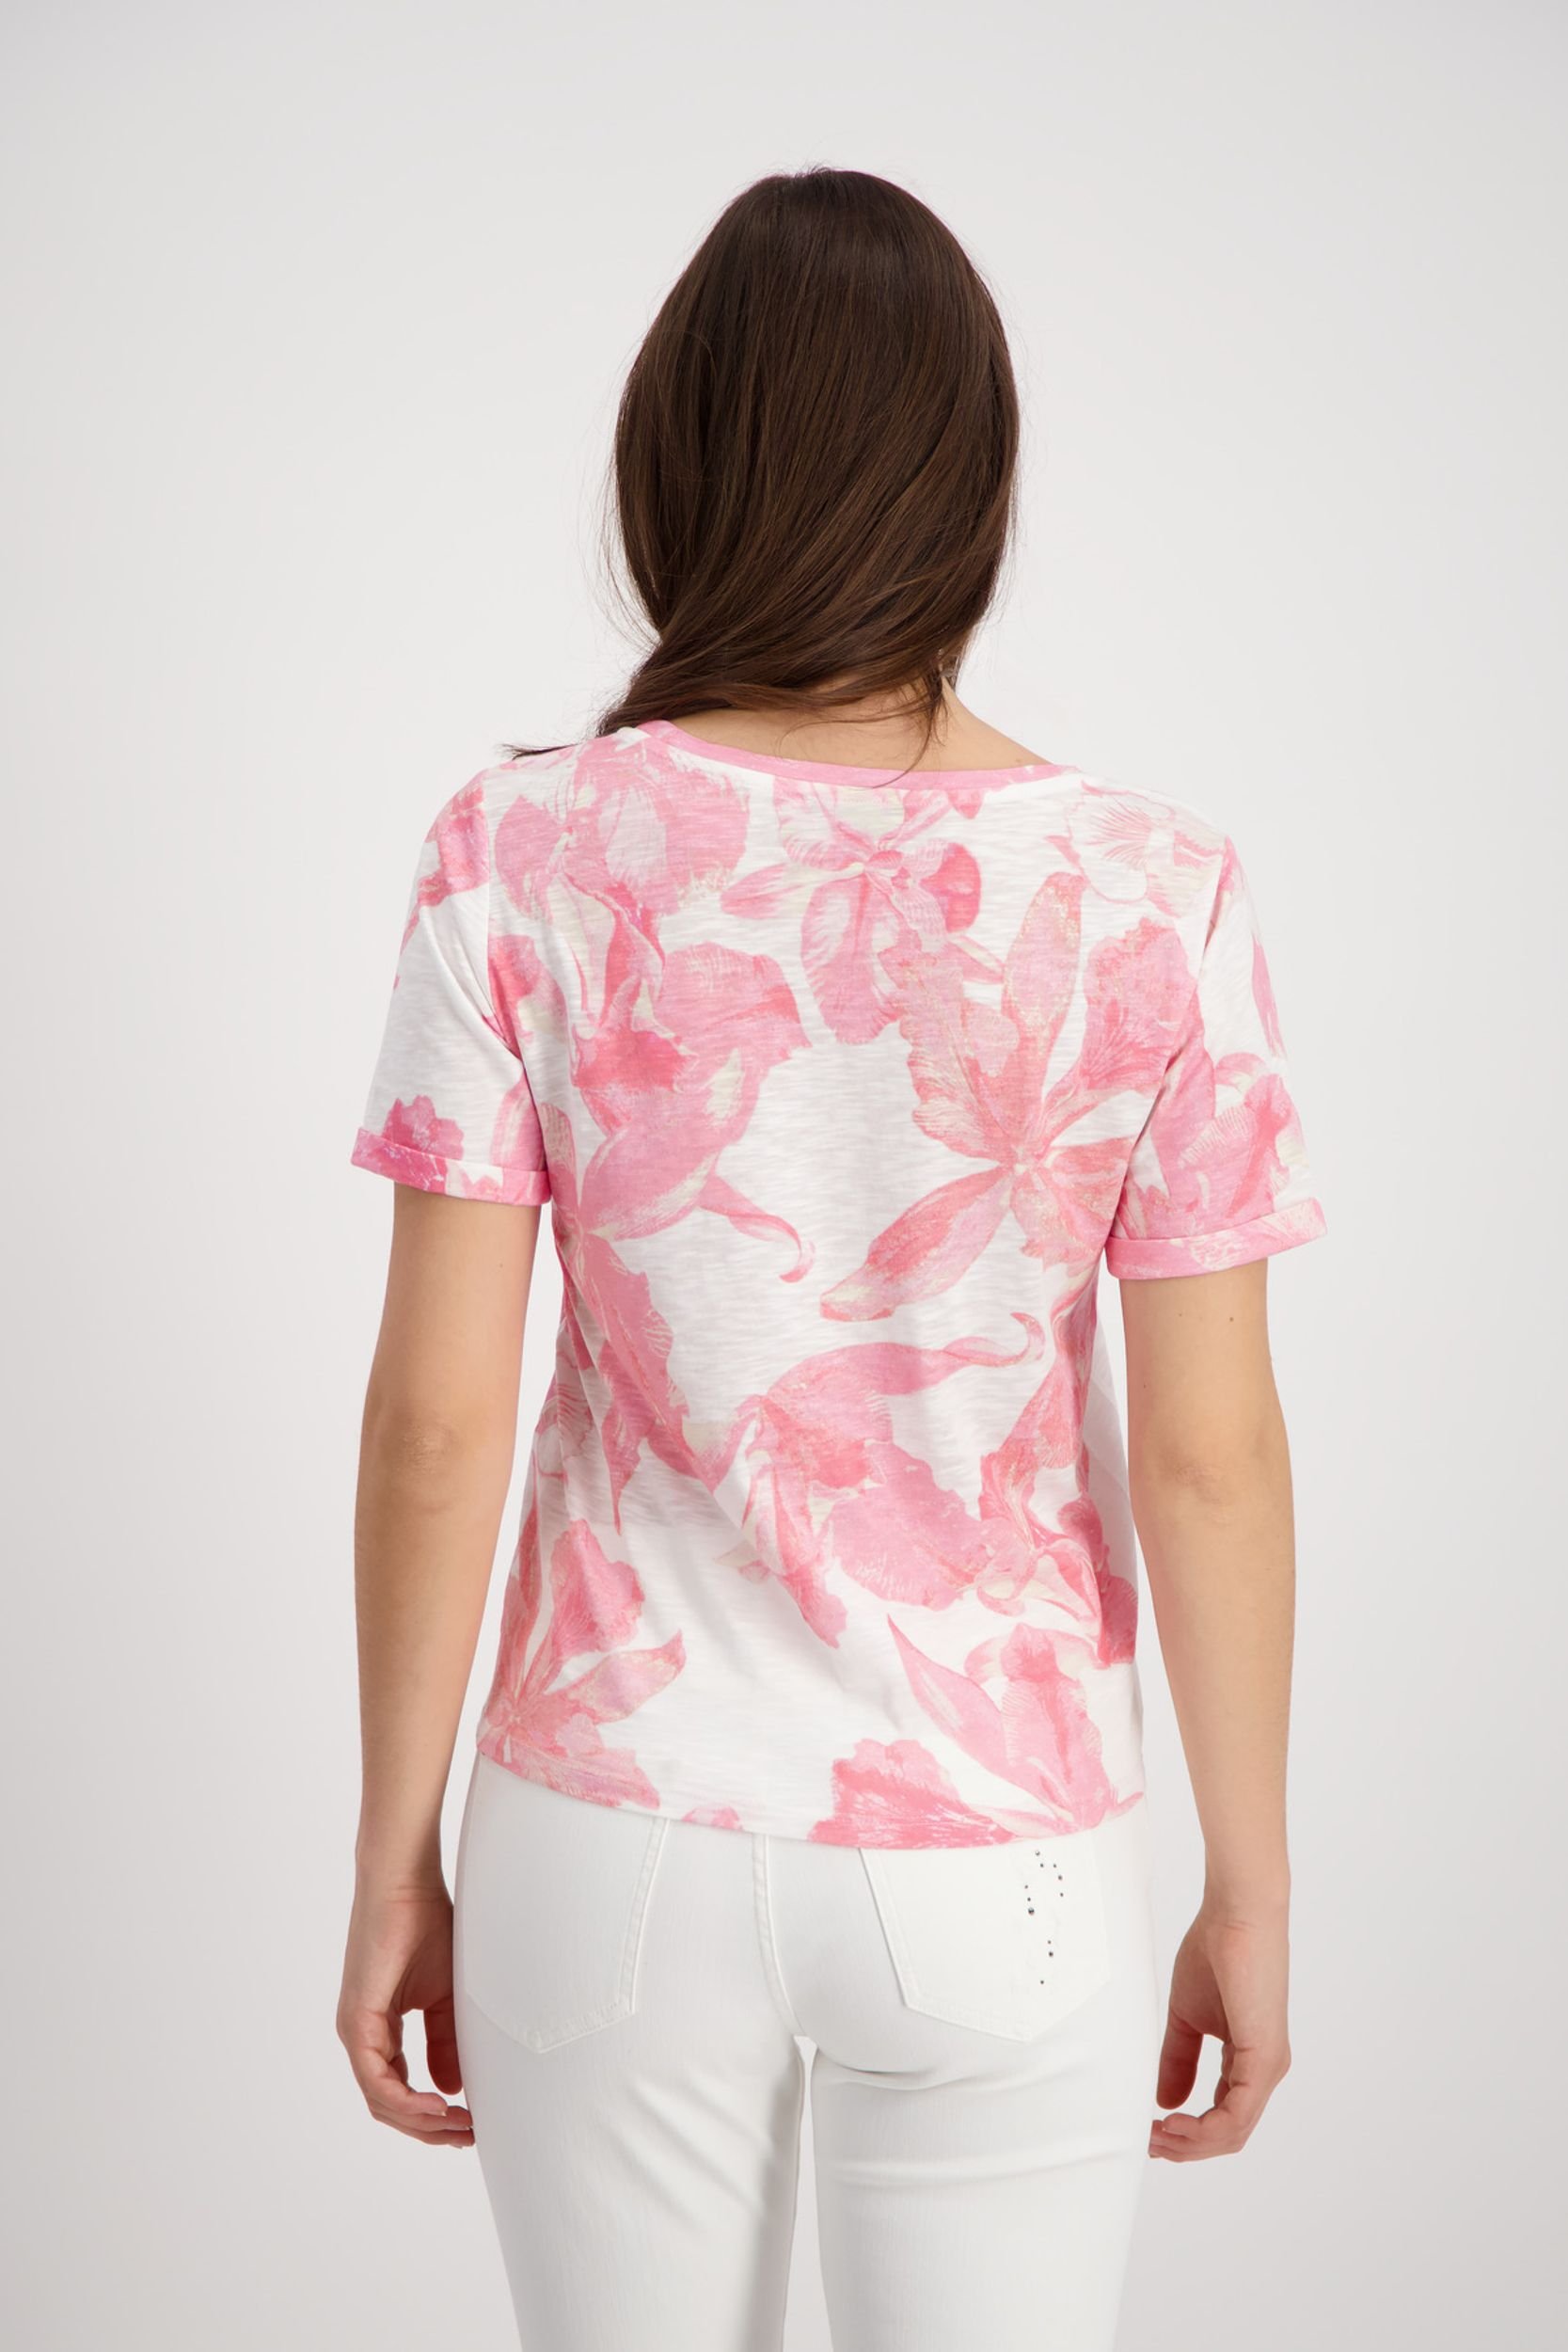 T-Shirt, pink smoothie gemustert